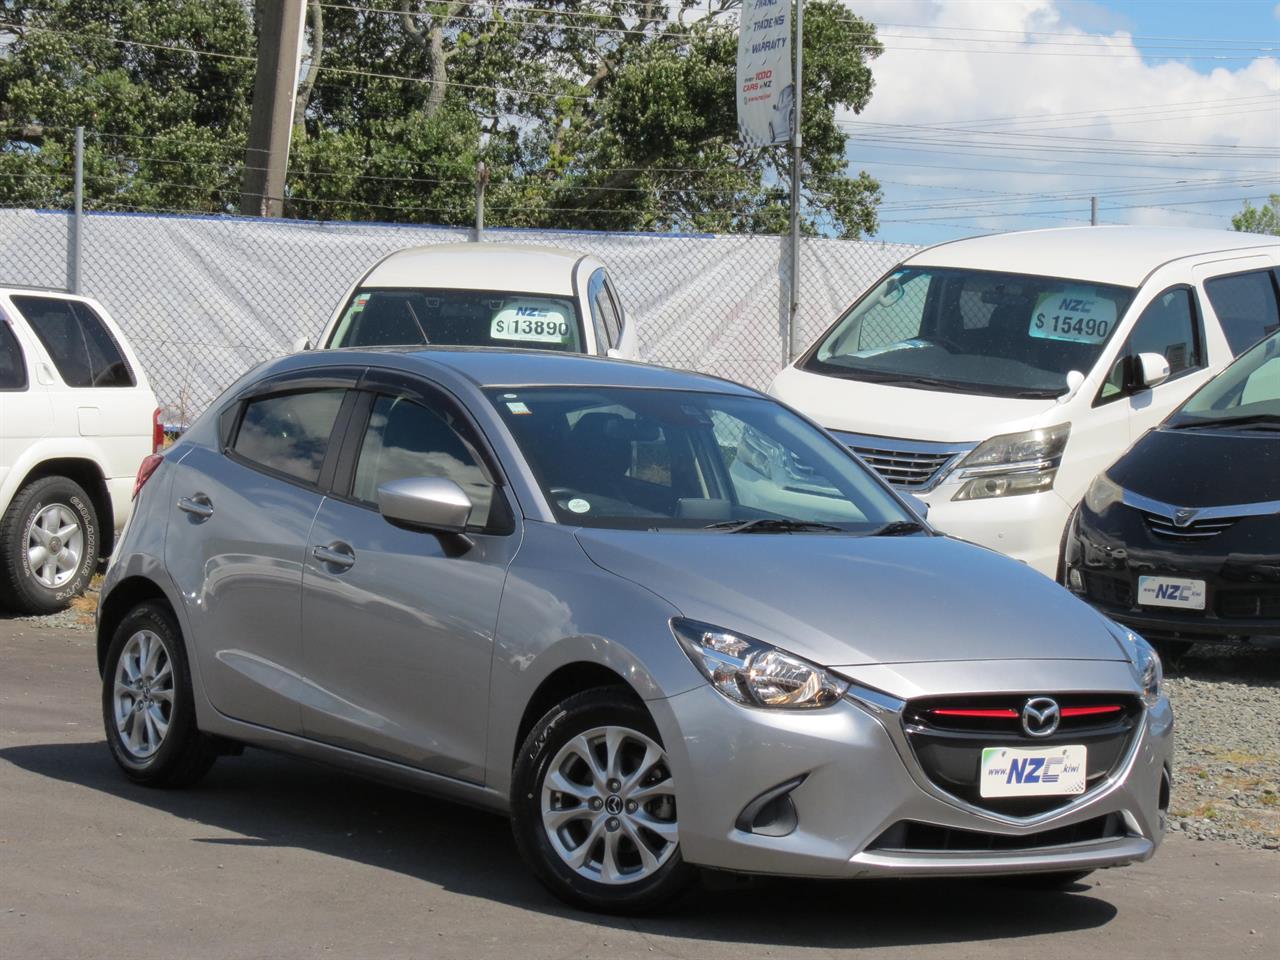 NZC 2016 Mazda Demio just arrived to Auckland